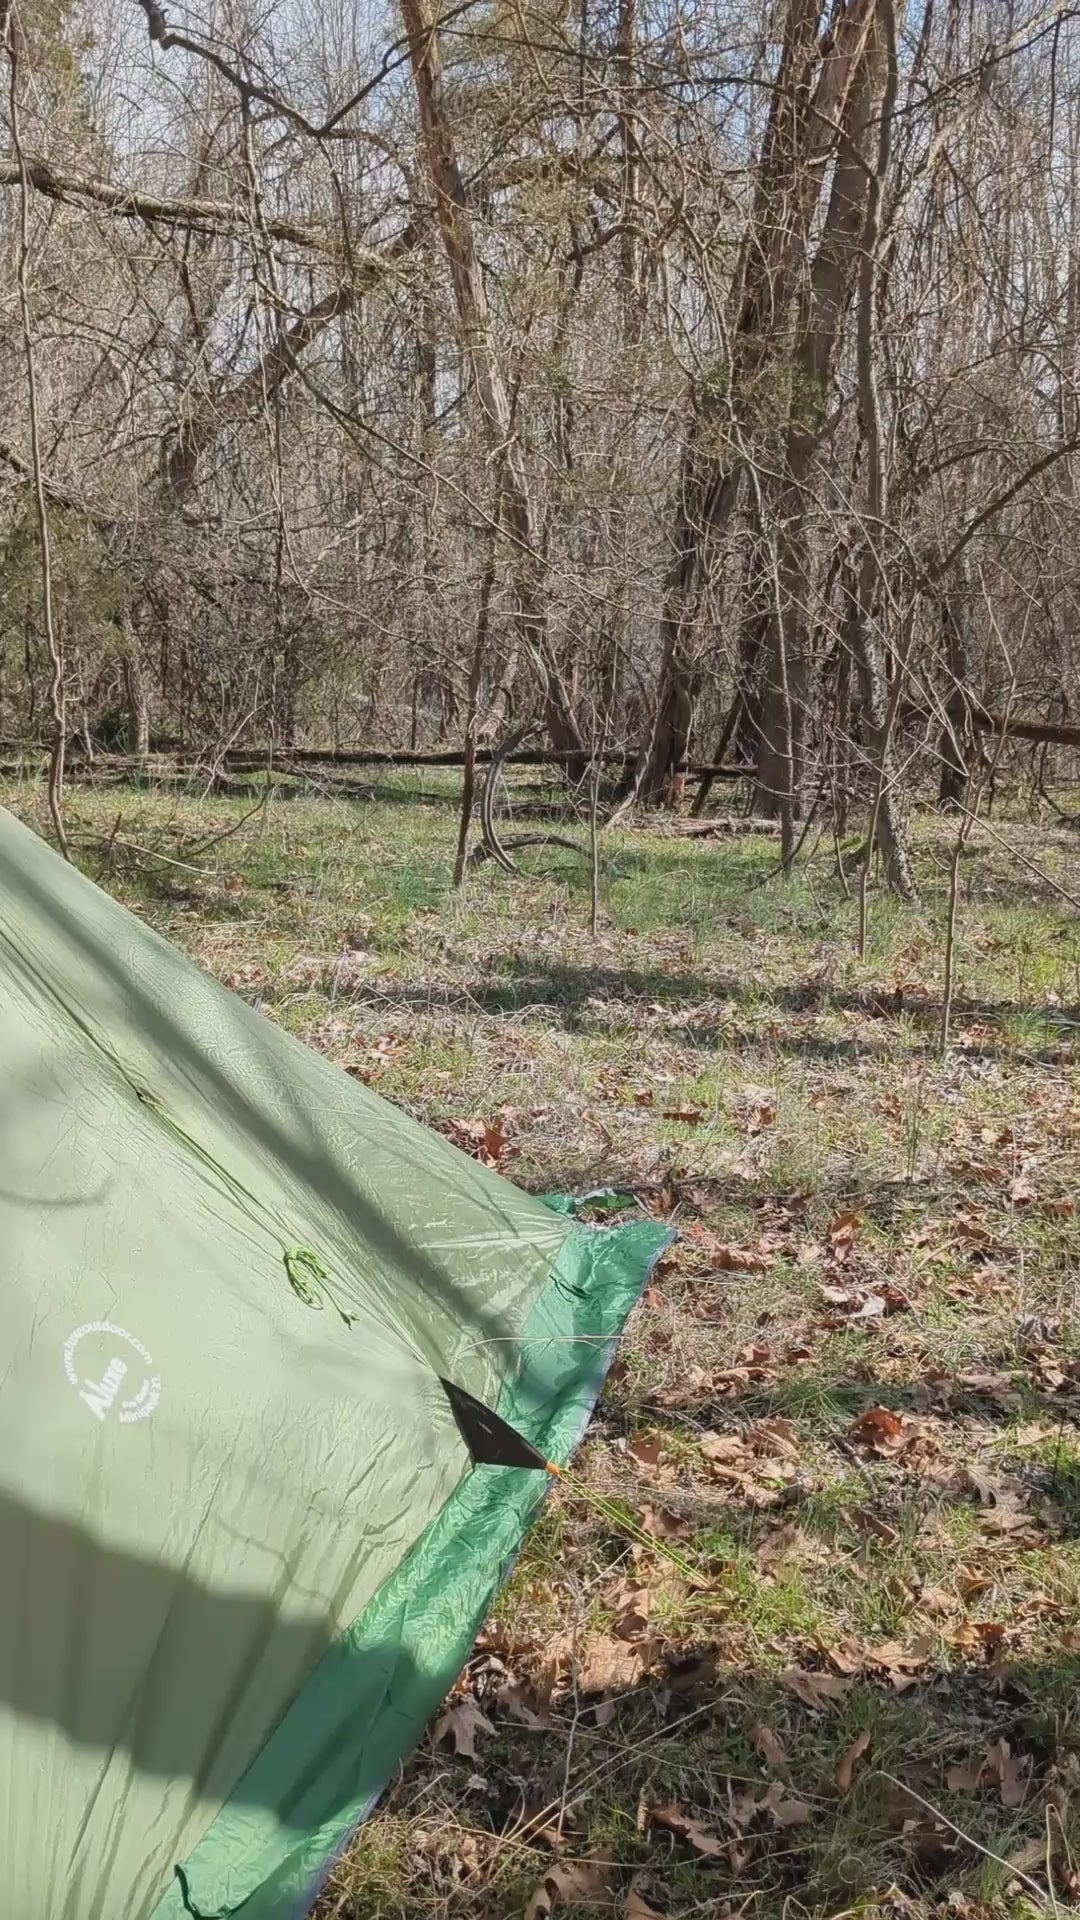 Minipeak XL Pro Hot Tent (4 Season)